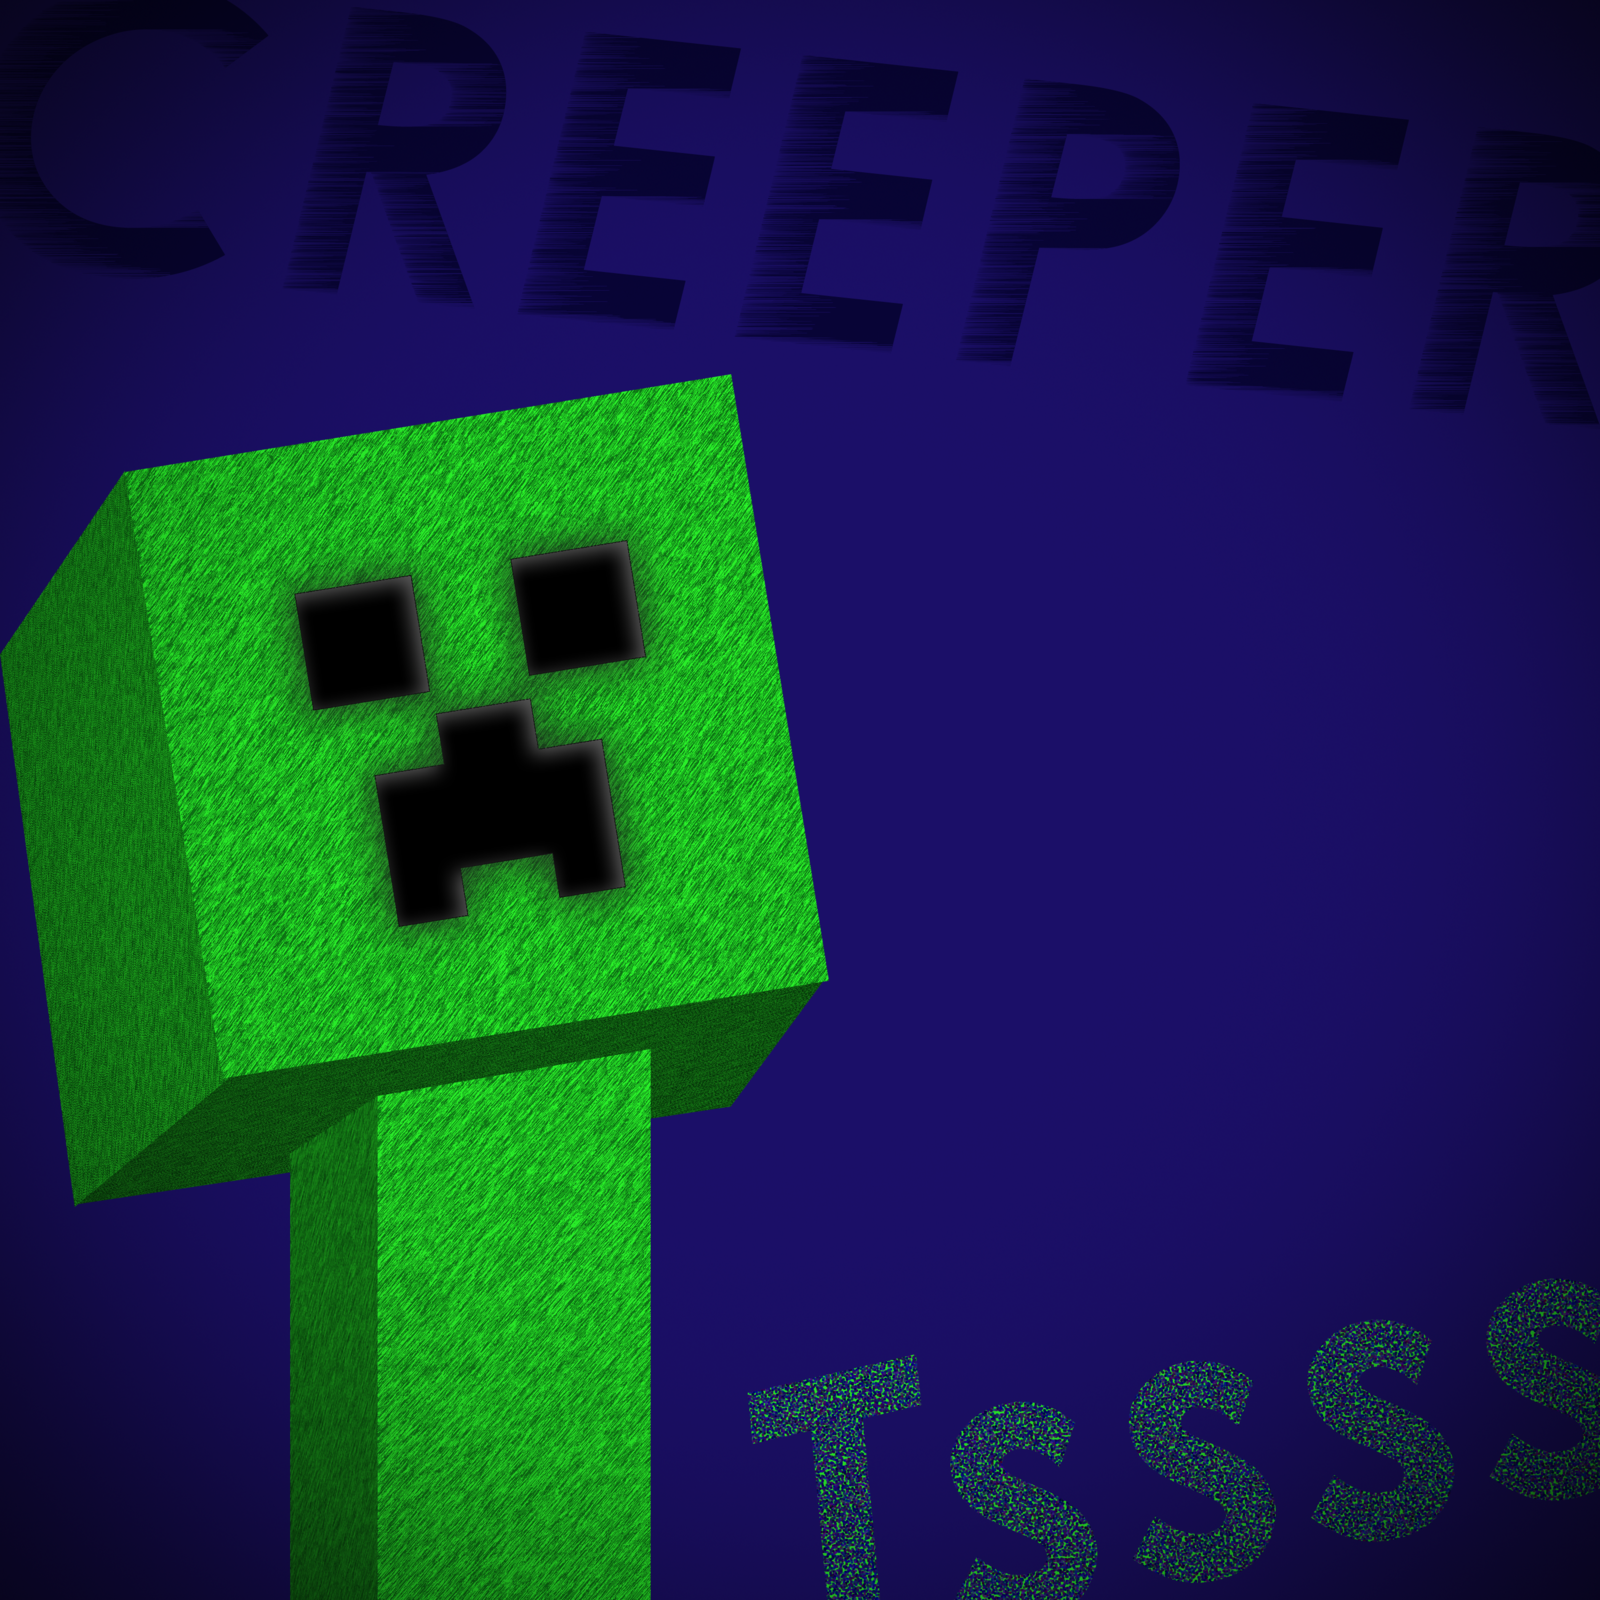 Minecraft Creeper Girl Wallpaper Image Crazy Gallery